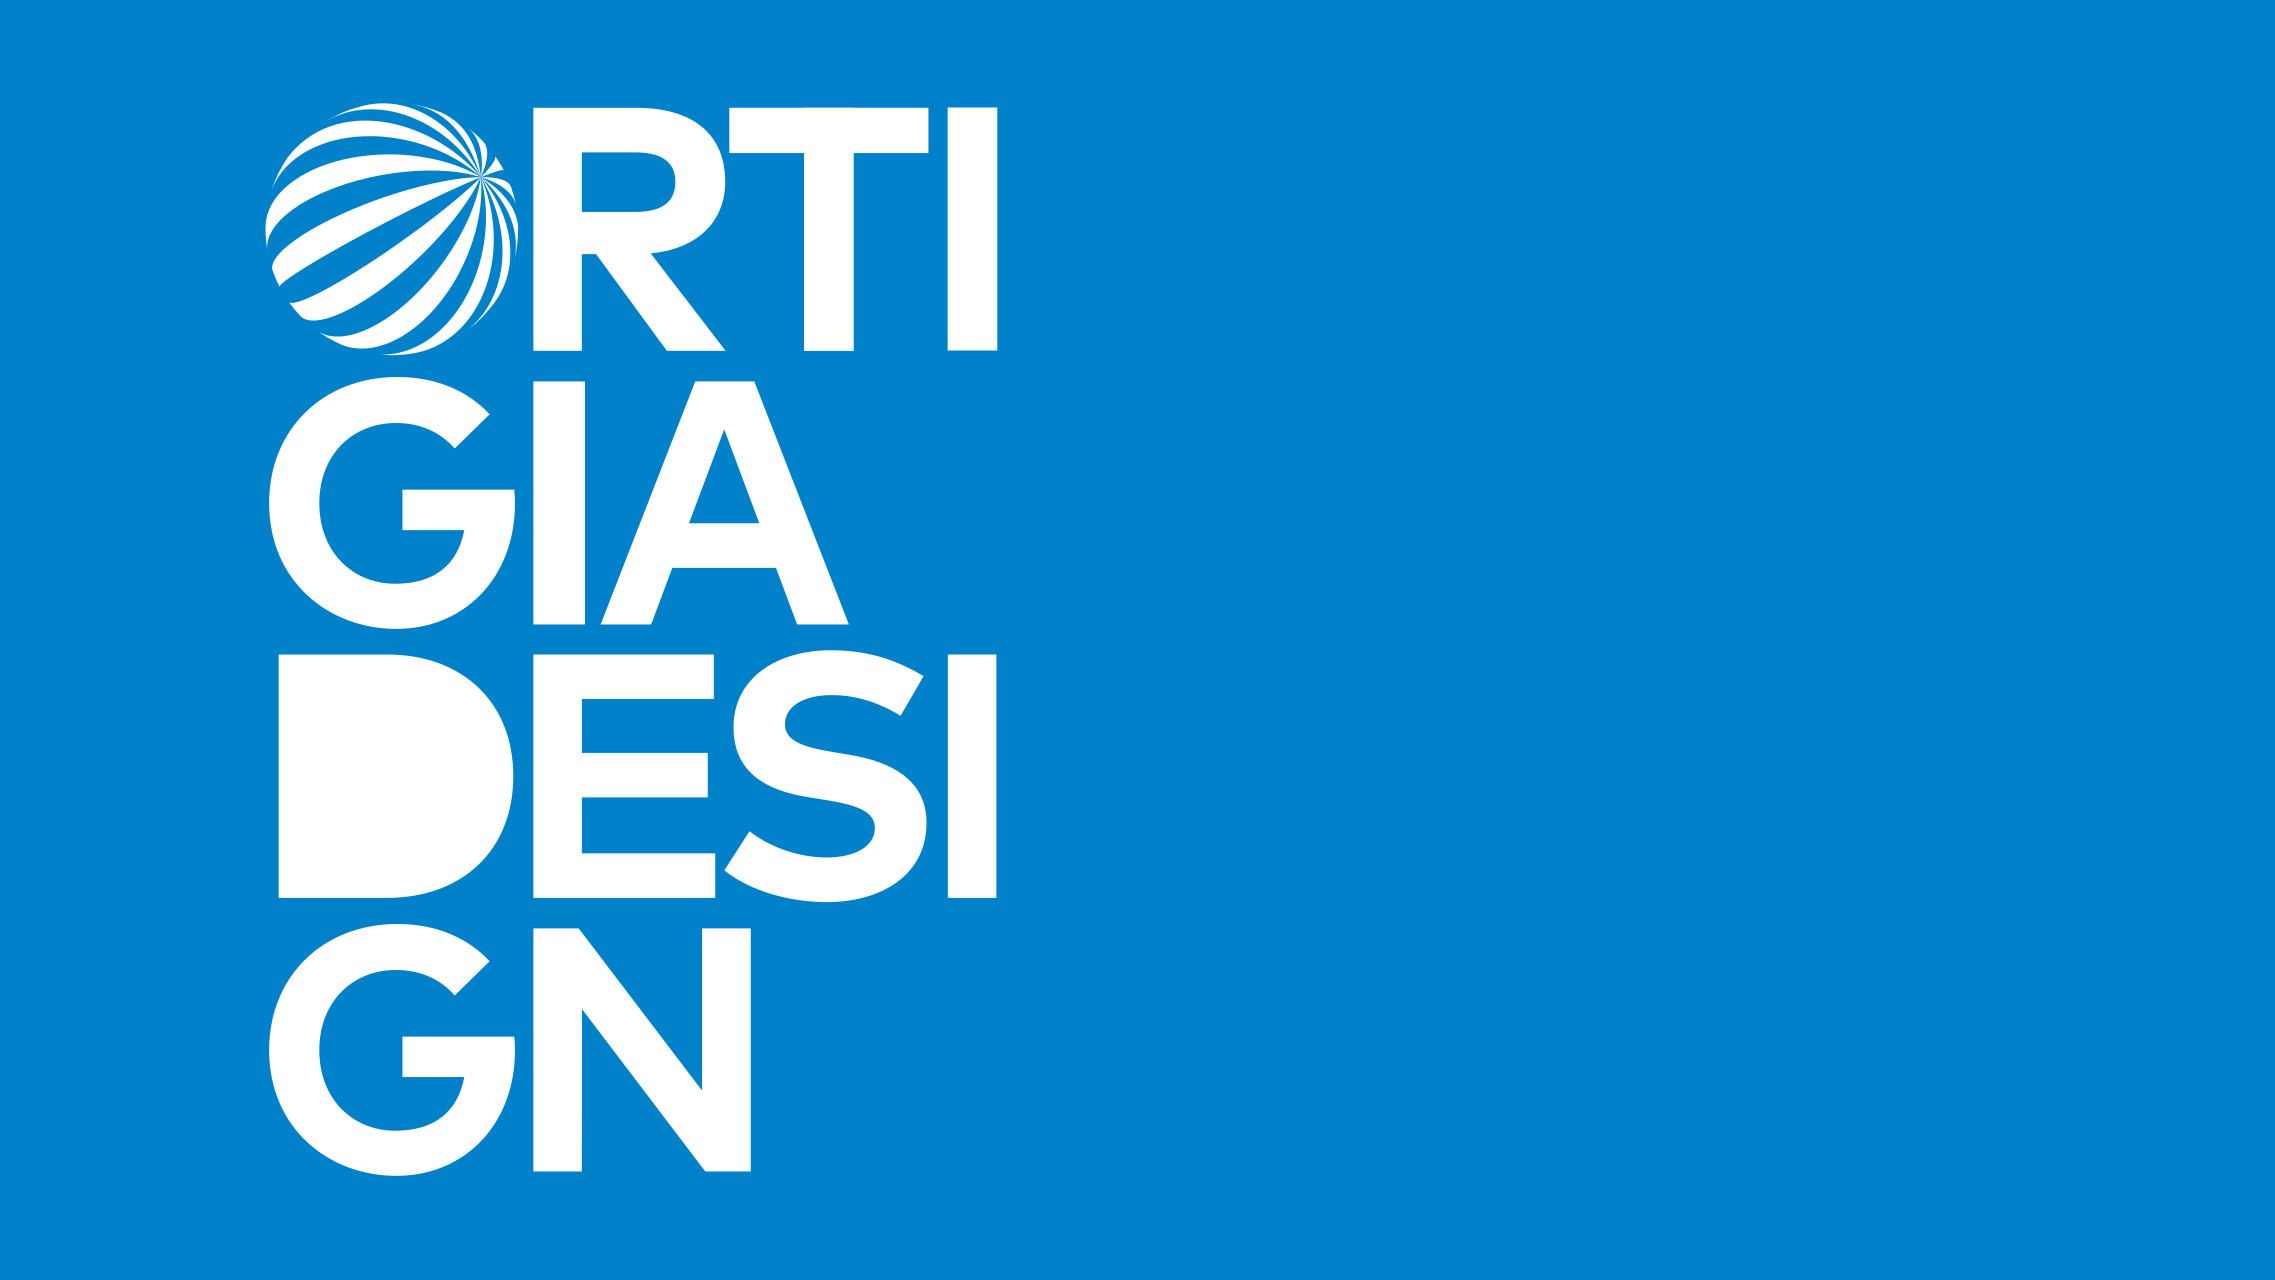 Ortigia Design Festival 2021